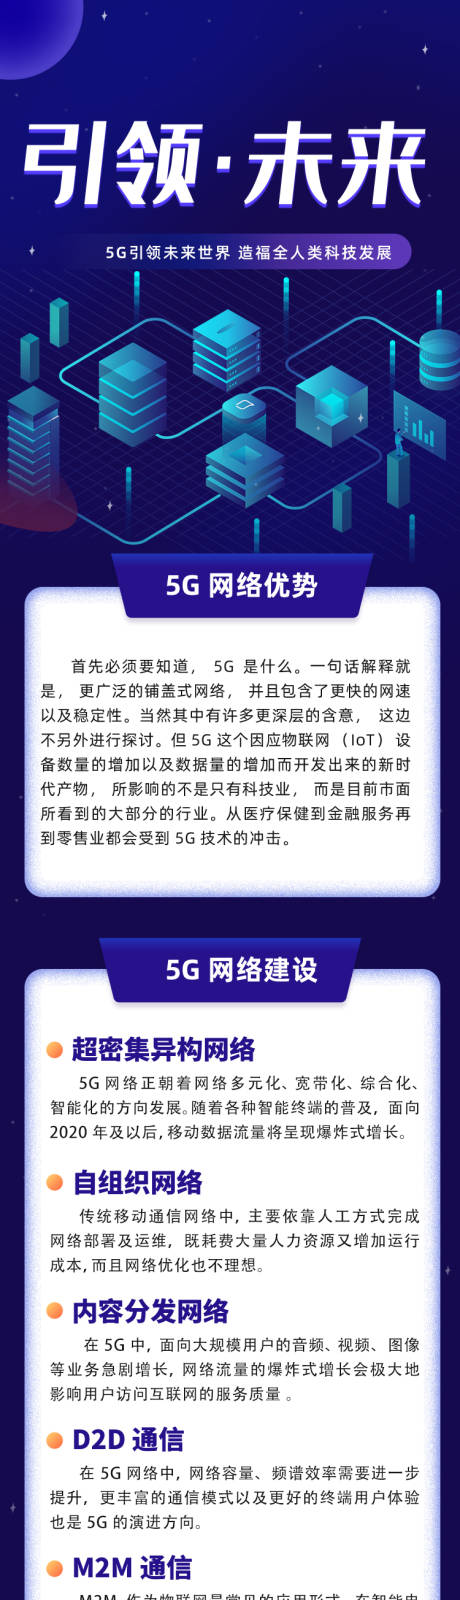 5G科技引领未来宣传长图